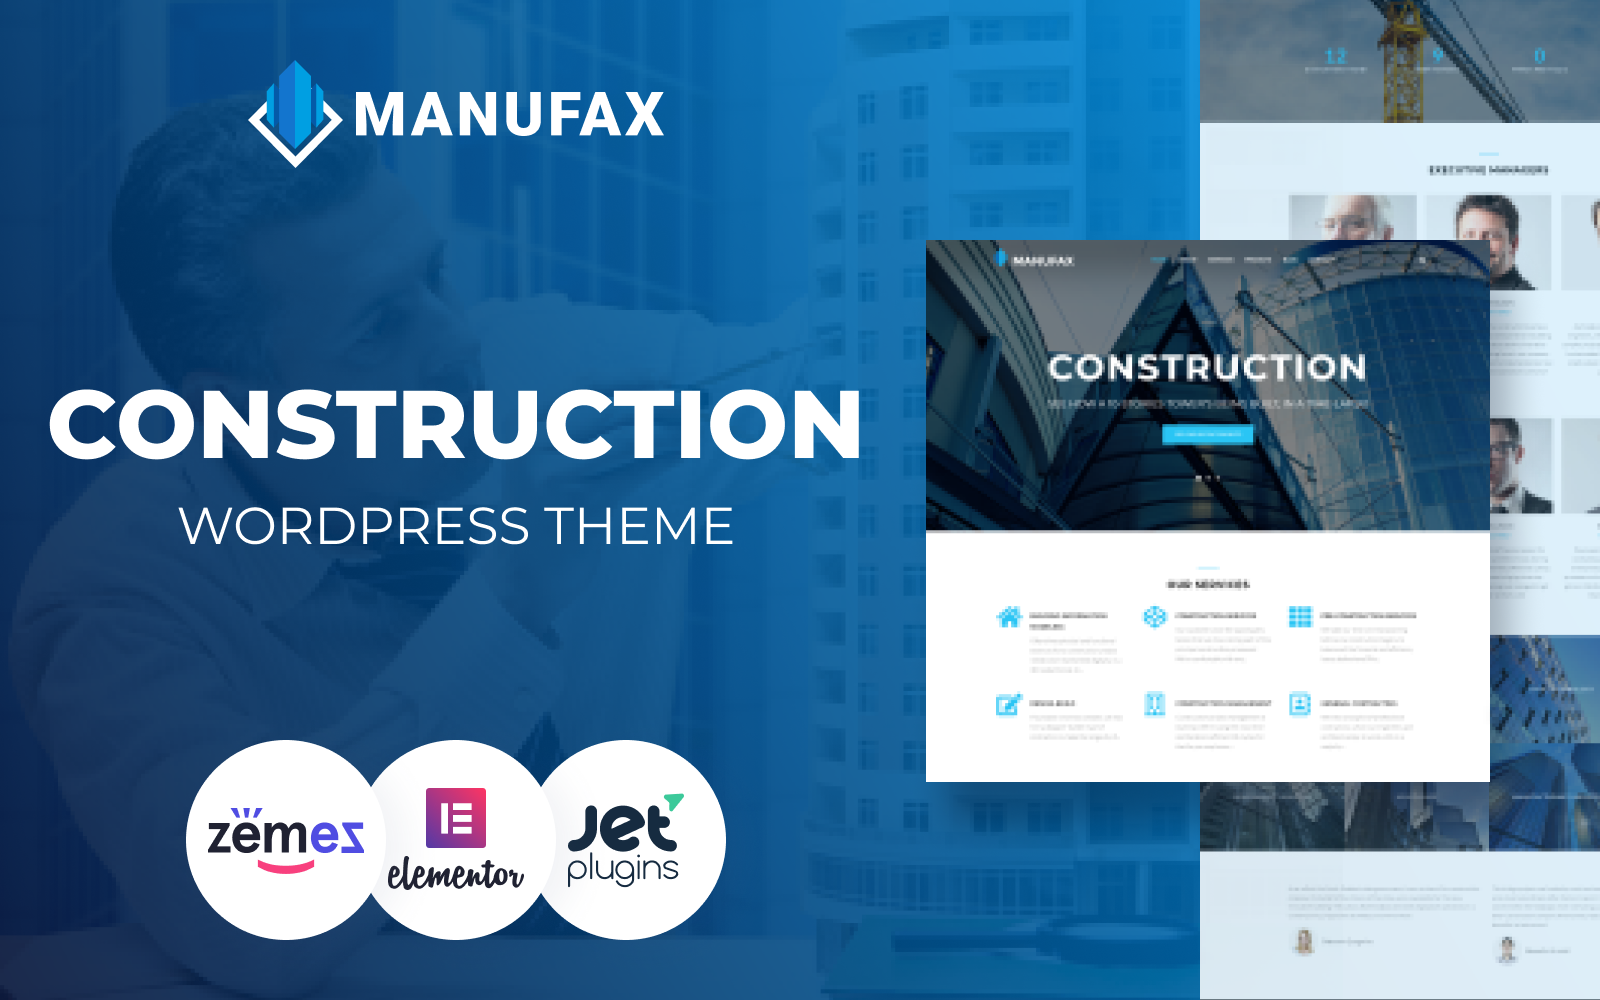 Manufax - Construction Multipurpose Creative WordPress Elementor Theme WordPress Theme